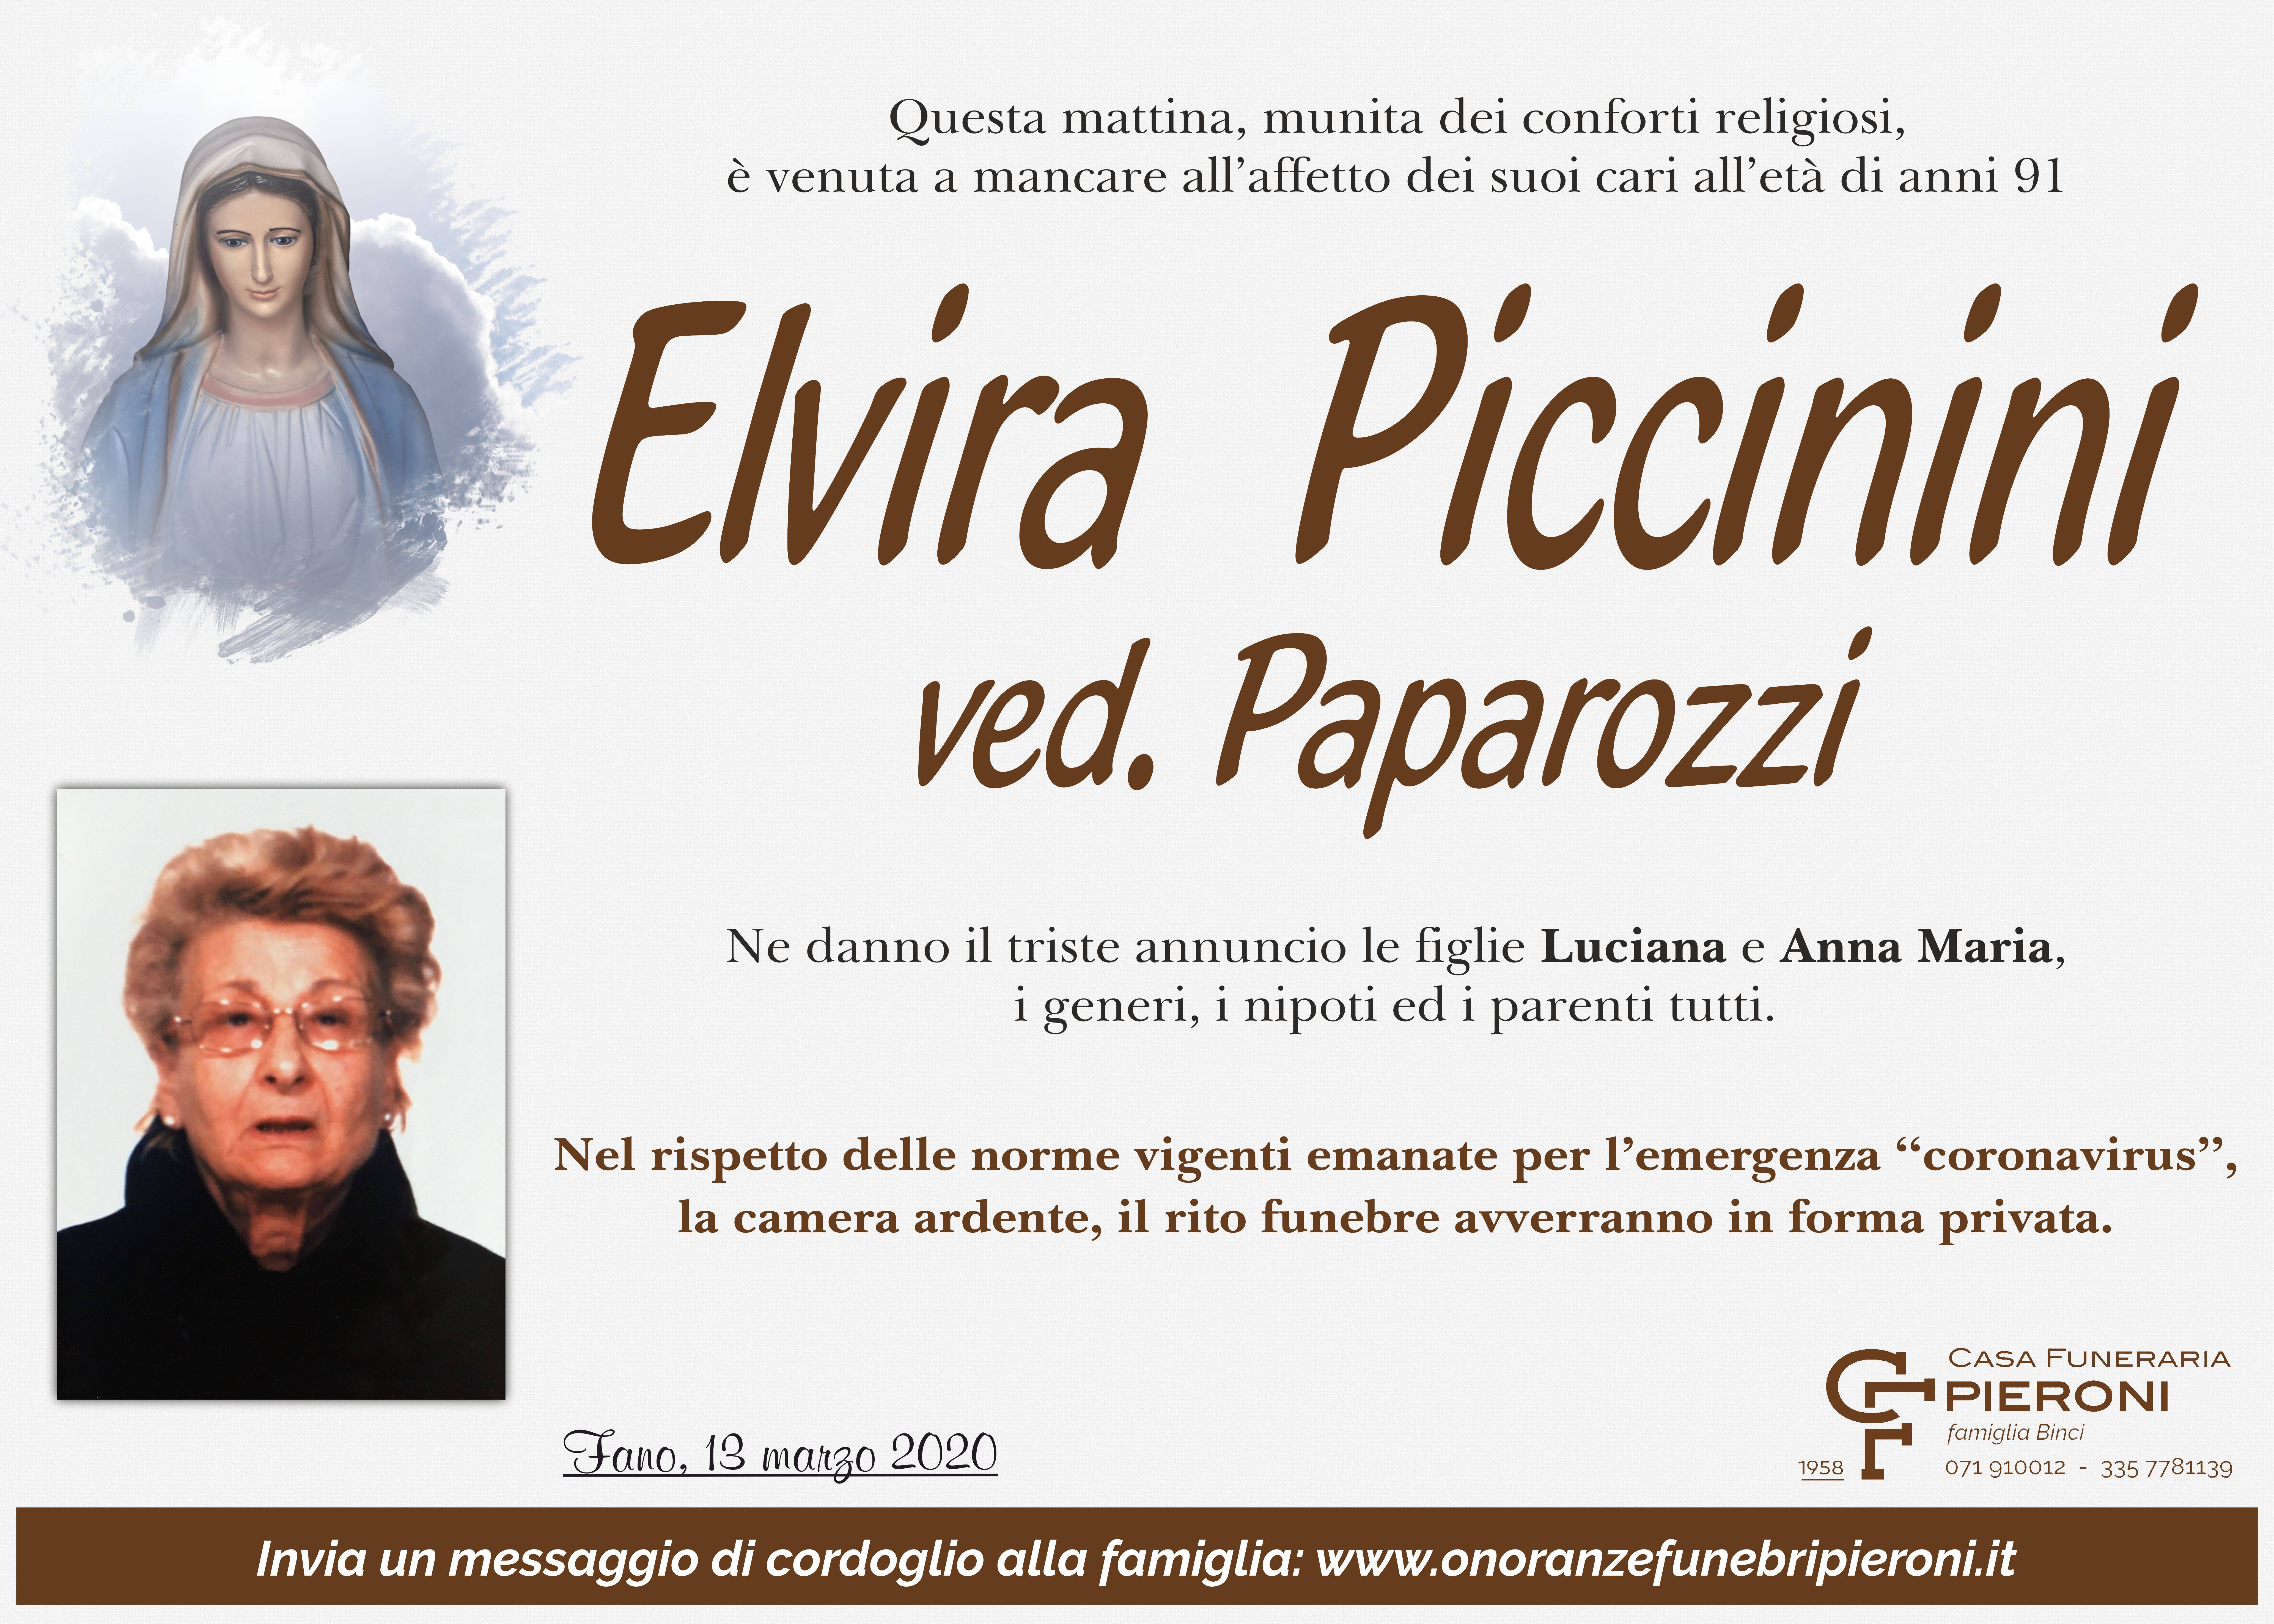 Elvira Piccinini